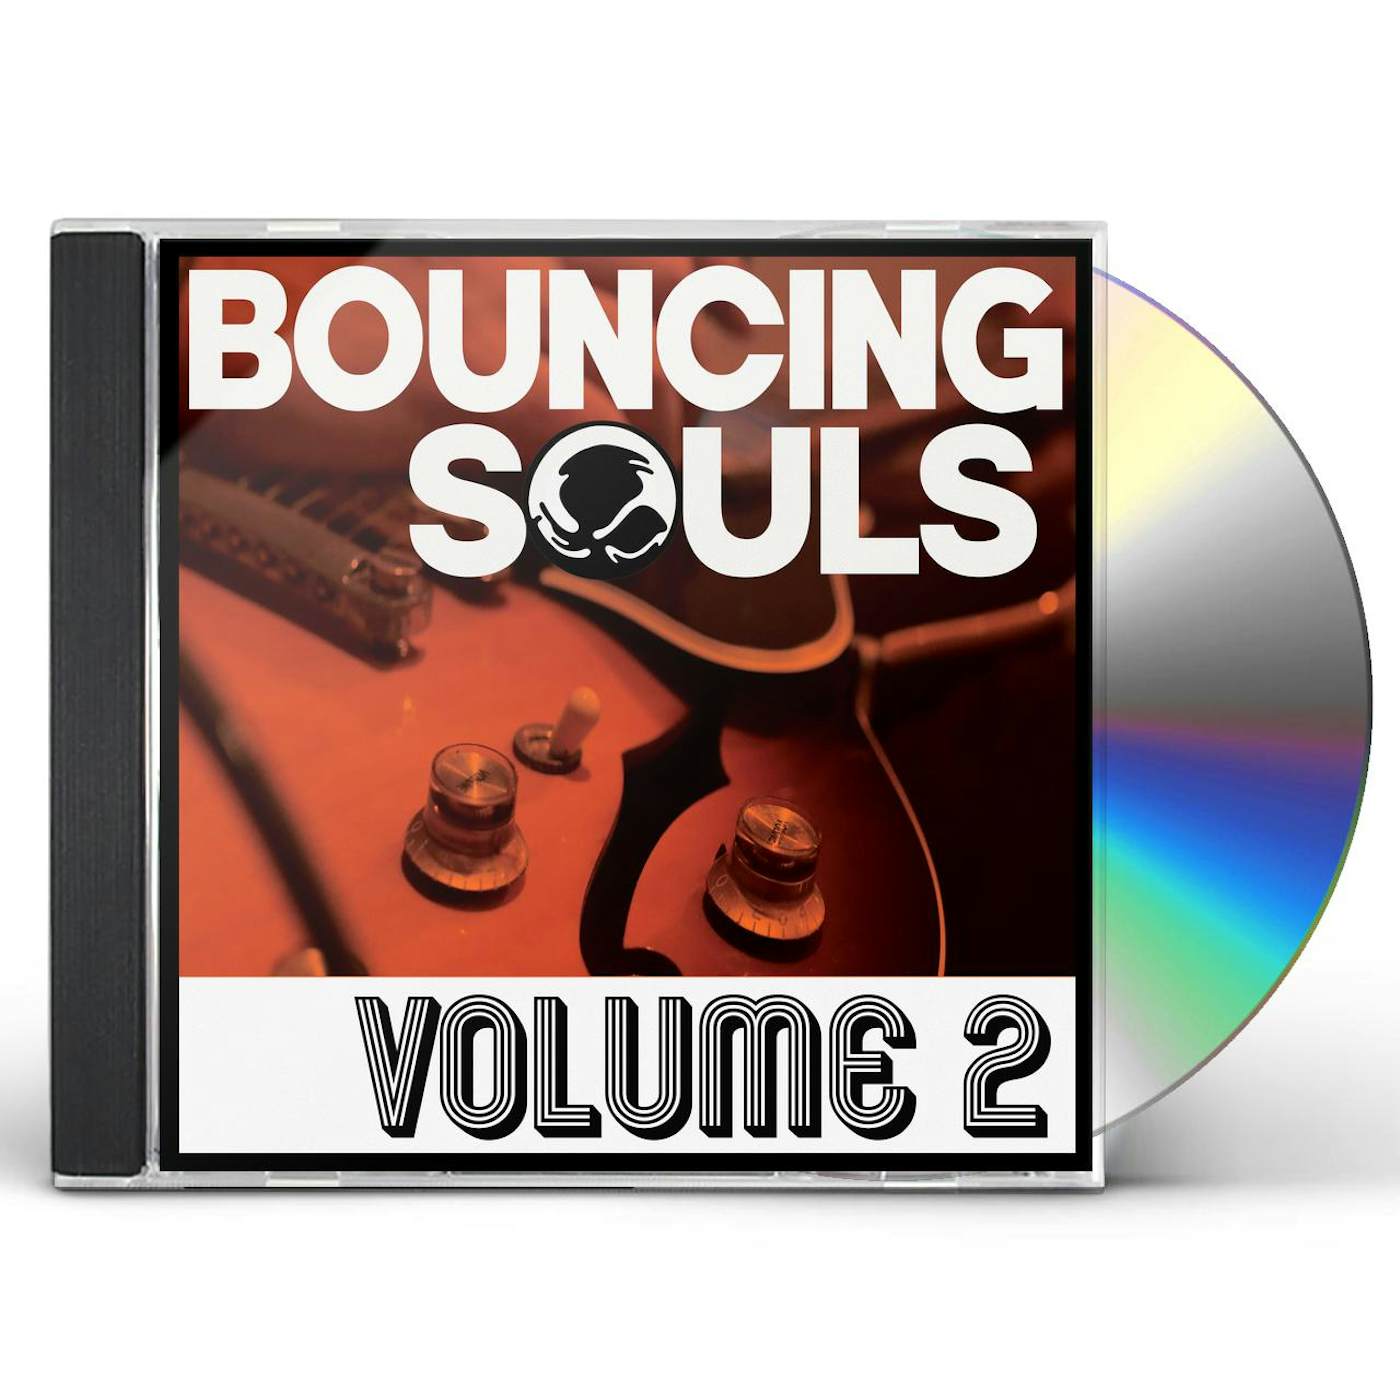 The Bouncing Souls VOLUME 2 CD